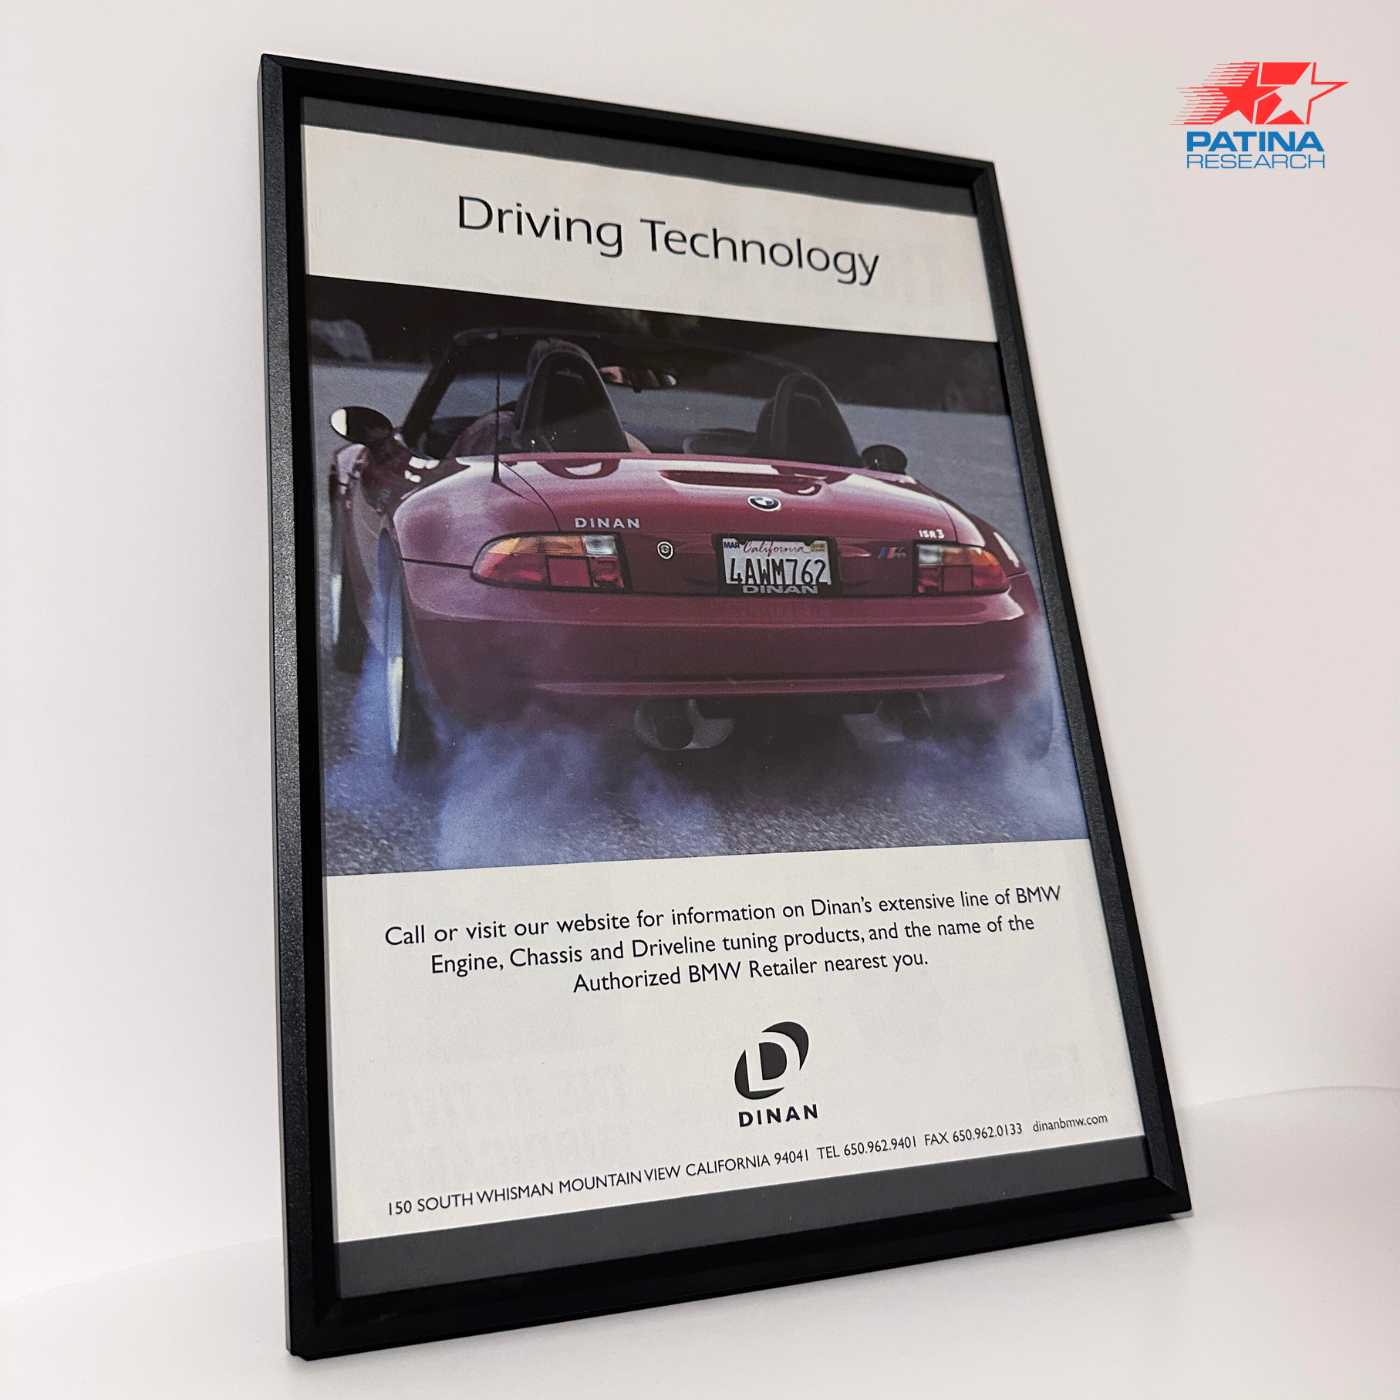 BMW dinan driving technology framed ad